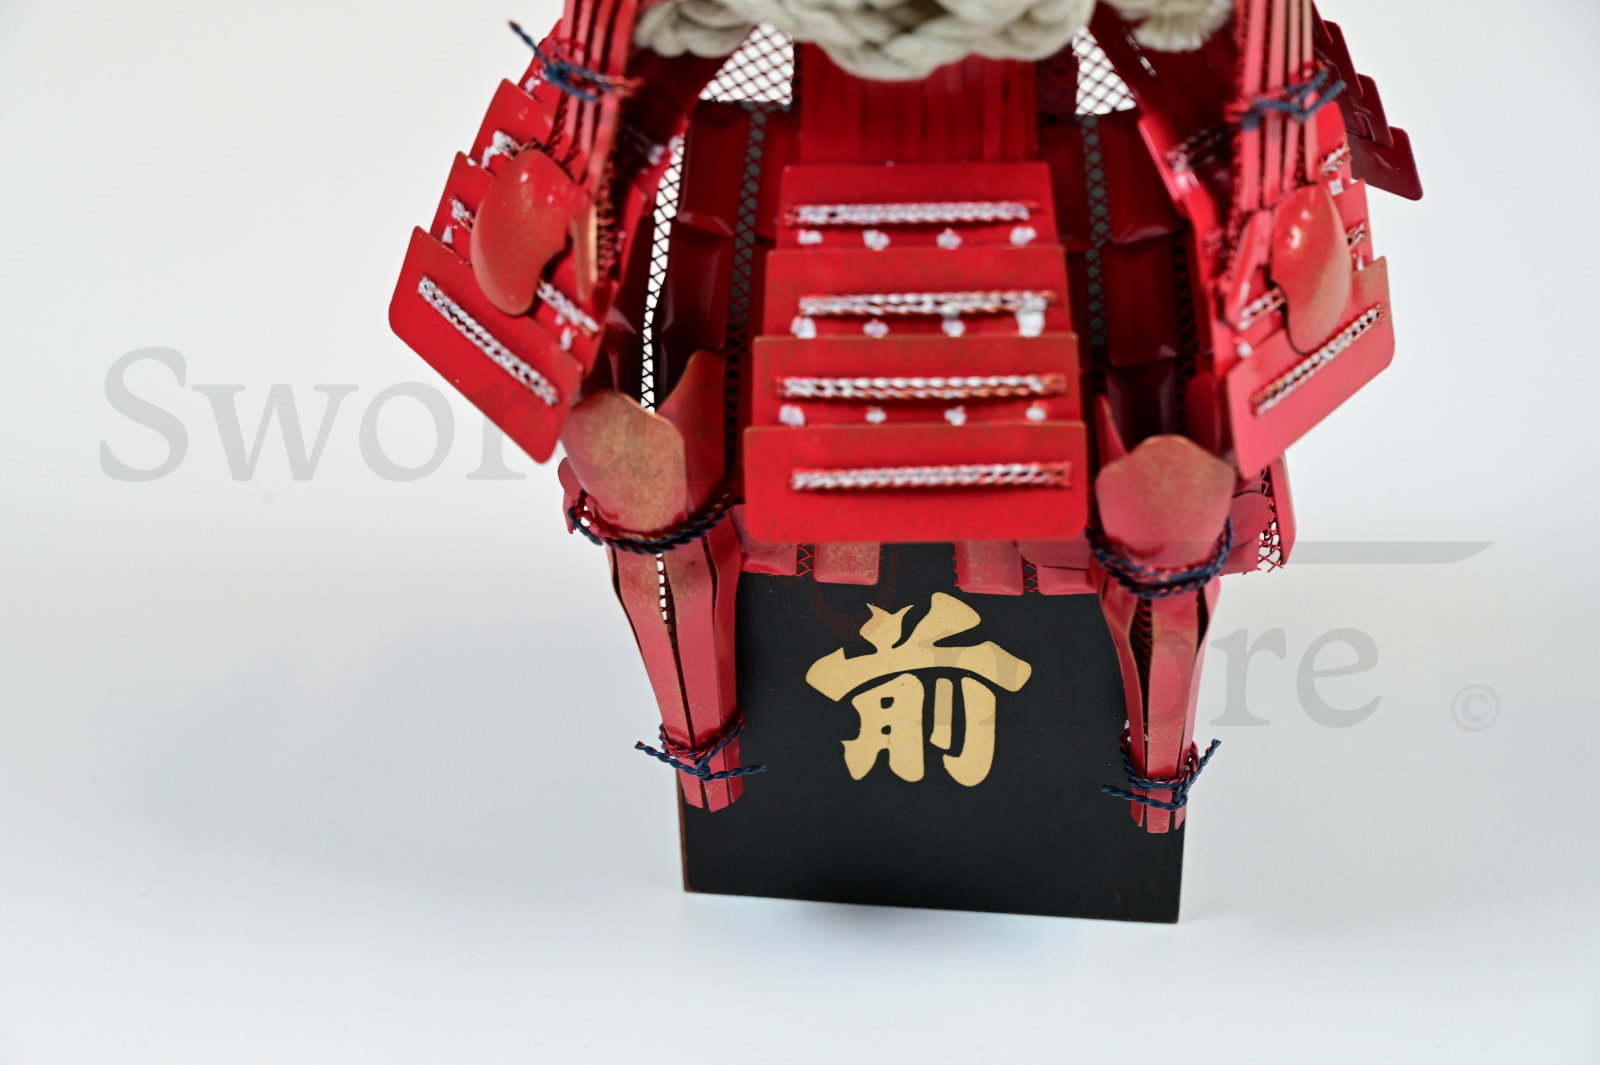 Japanese samurai armor miniature, red